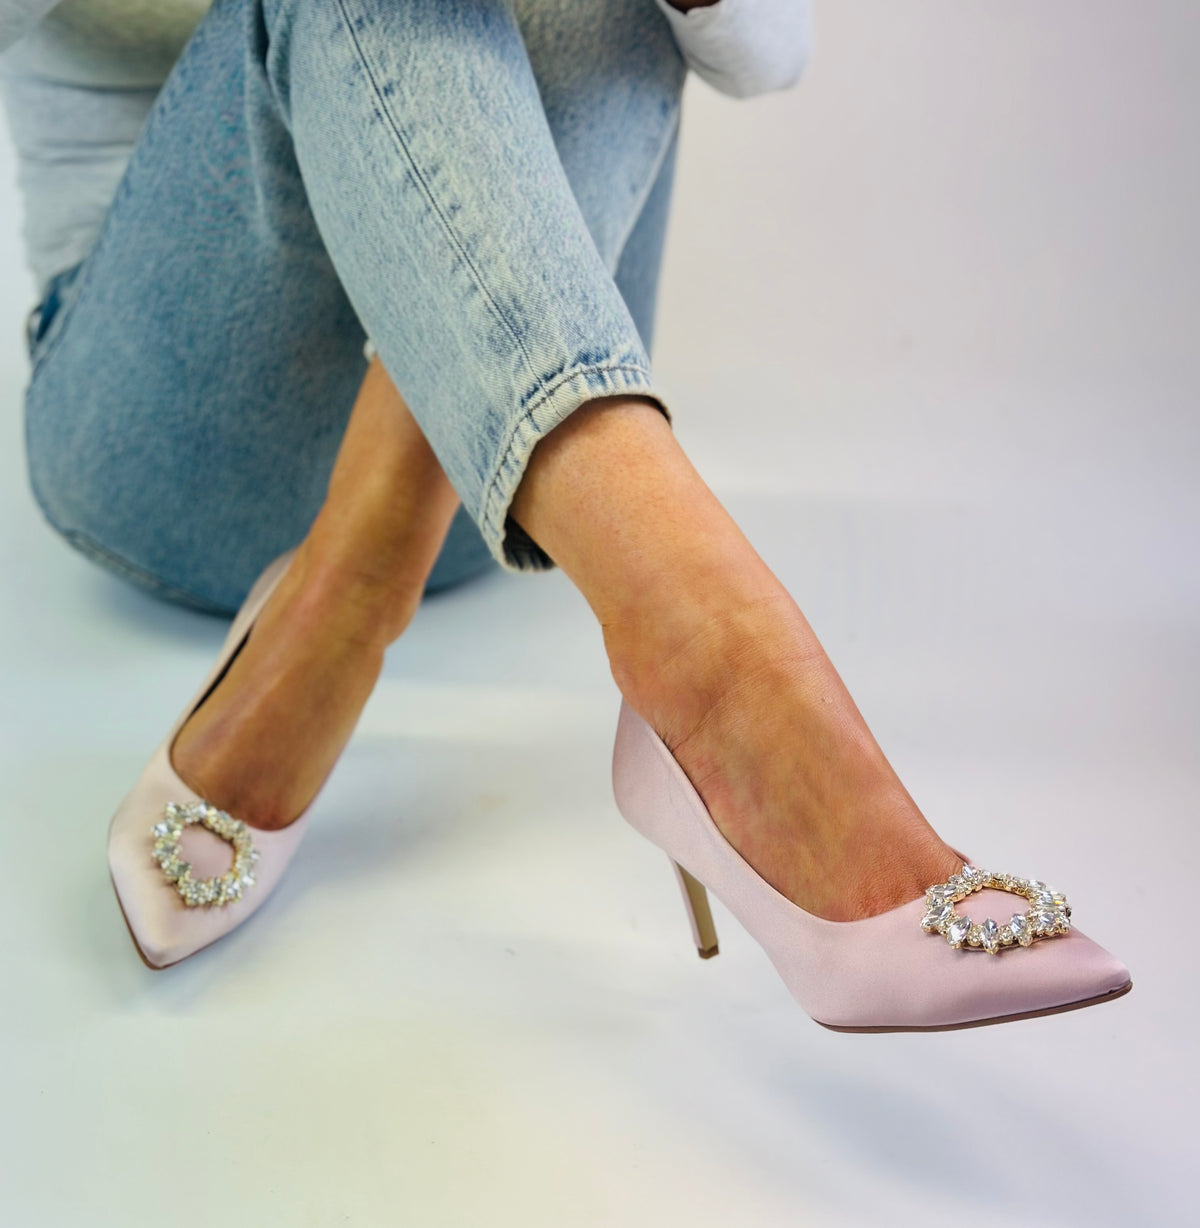 SAMPLE SALE Blush satin heels size 40